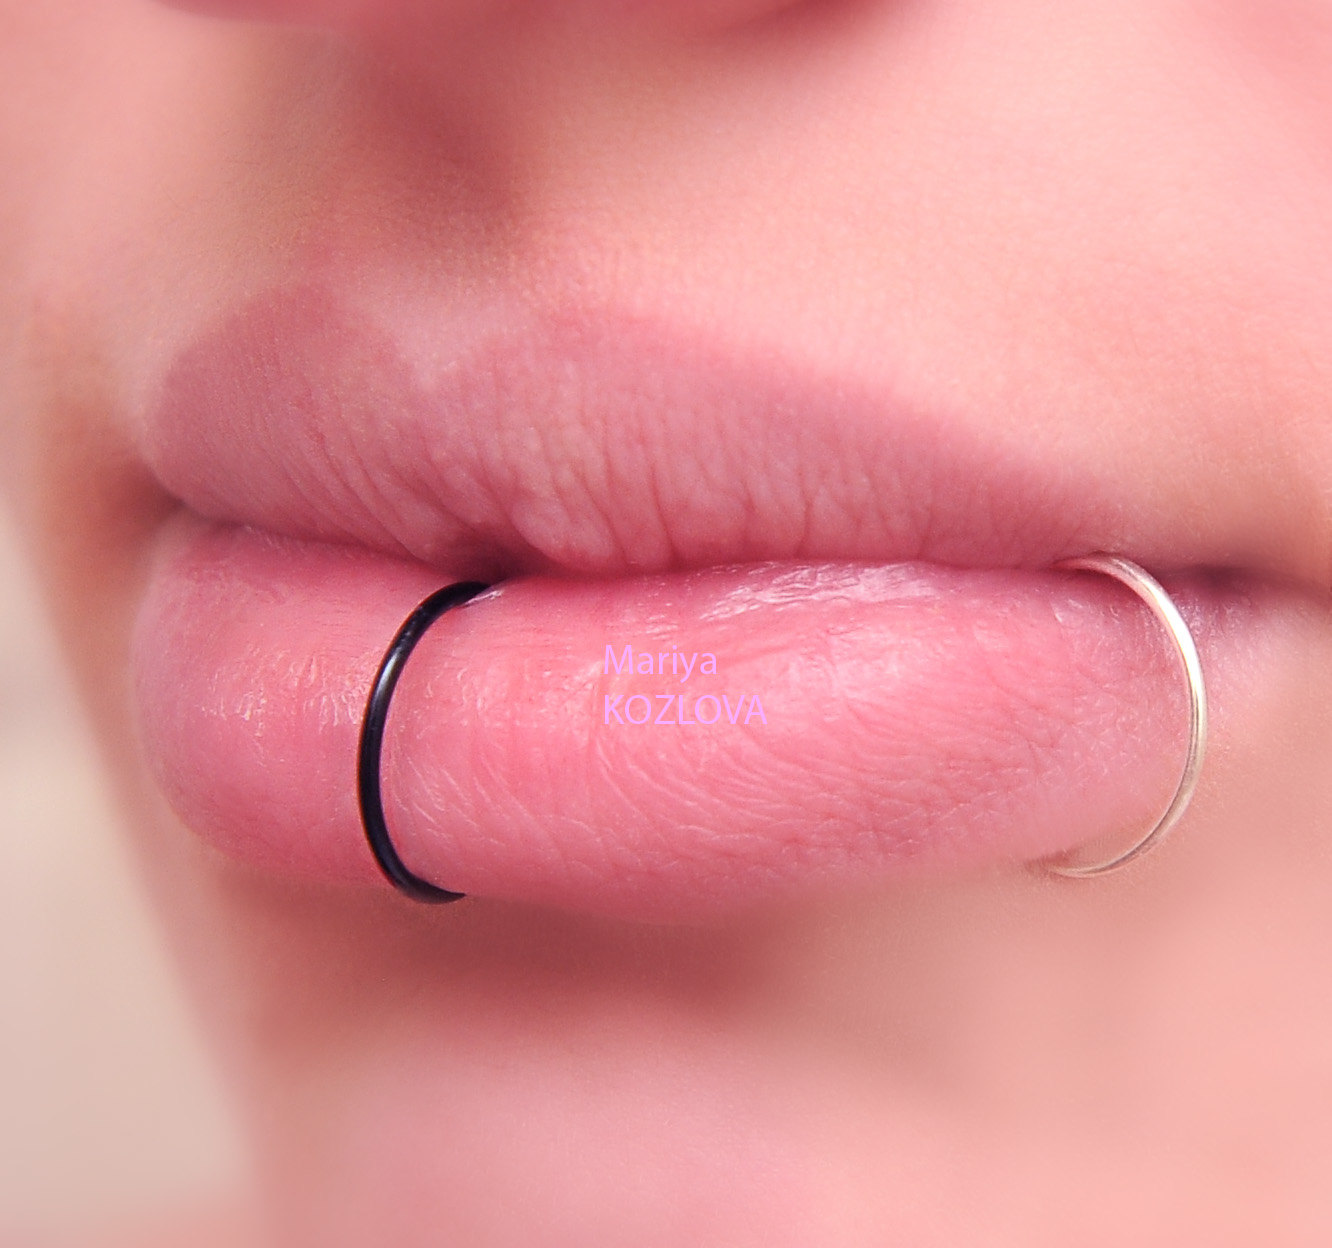 Girl Lower Lip Piercing With Rings